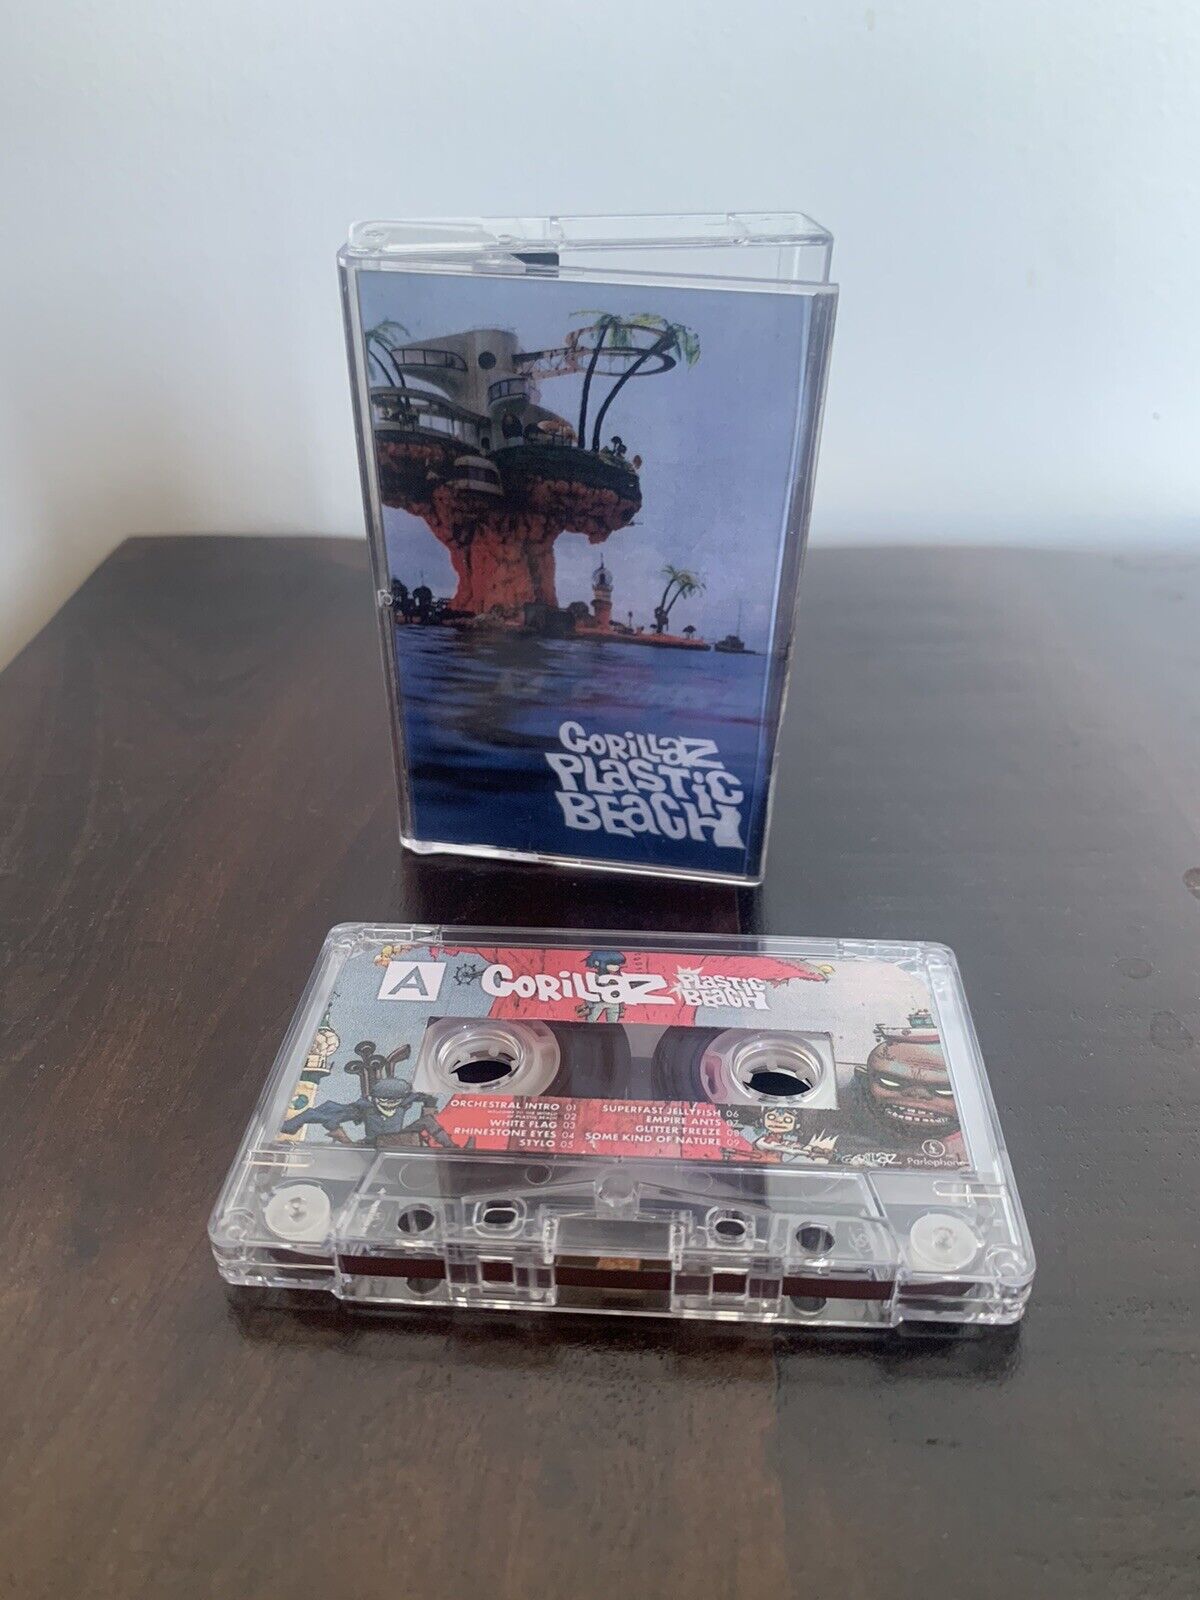 Gorillaz - Plastic Beach Cassette Tape RARE (EU, 2010)